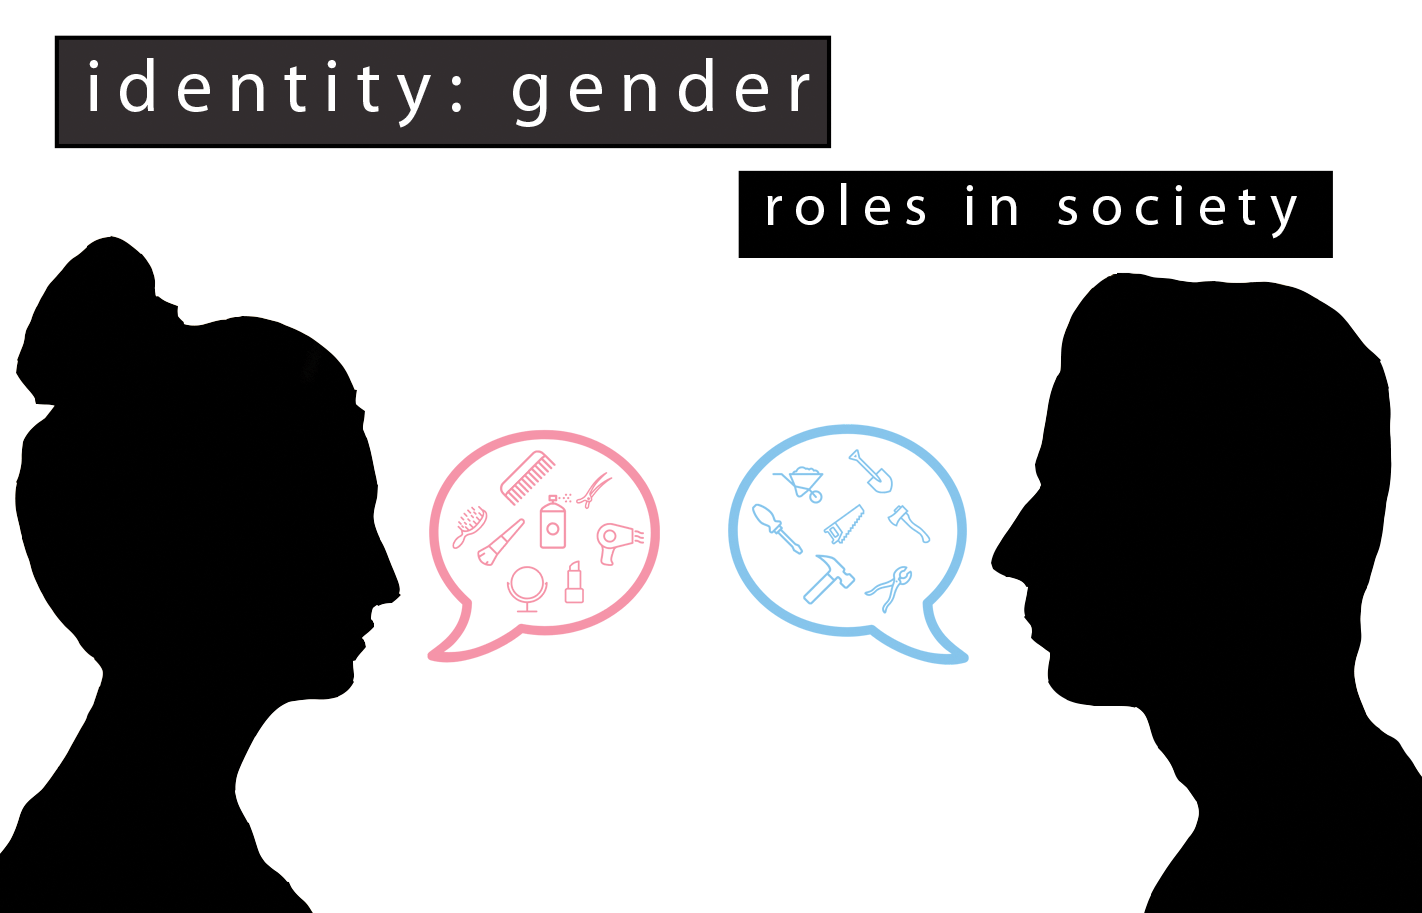 Identity: Gender, roles in society